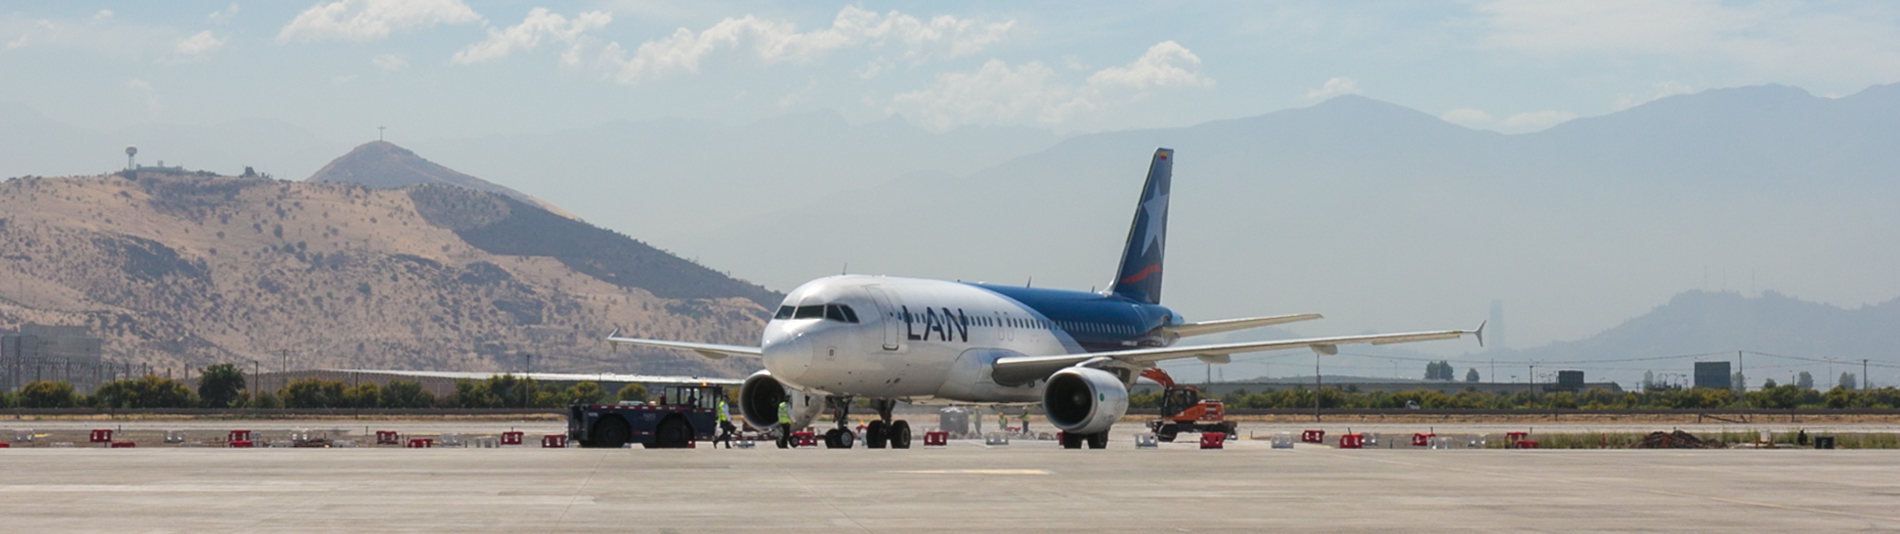 Transport - Planes (airlines) in Santiago